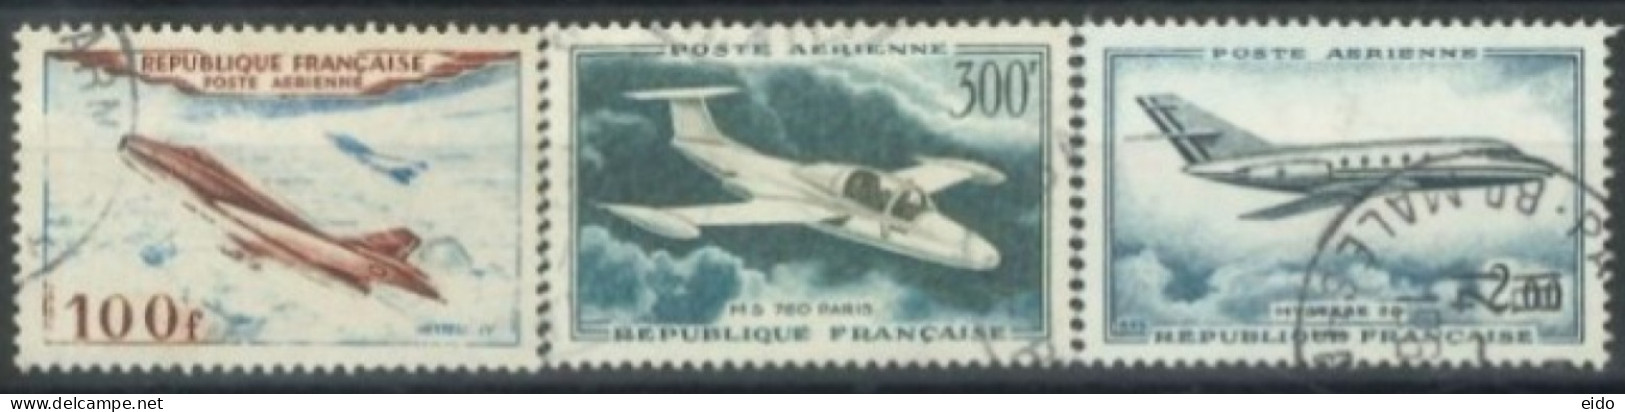 FRANCE - 1954/65 - AIR PLANES STAMPS SET OF 3, USED - Oblitérés